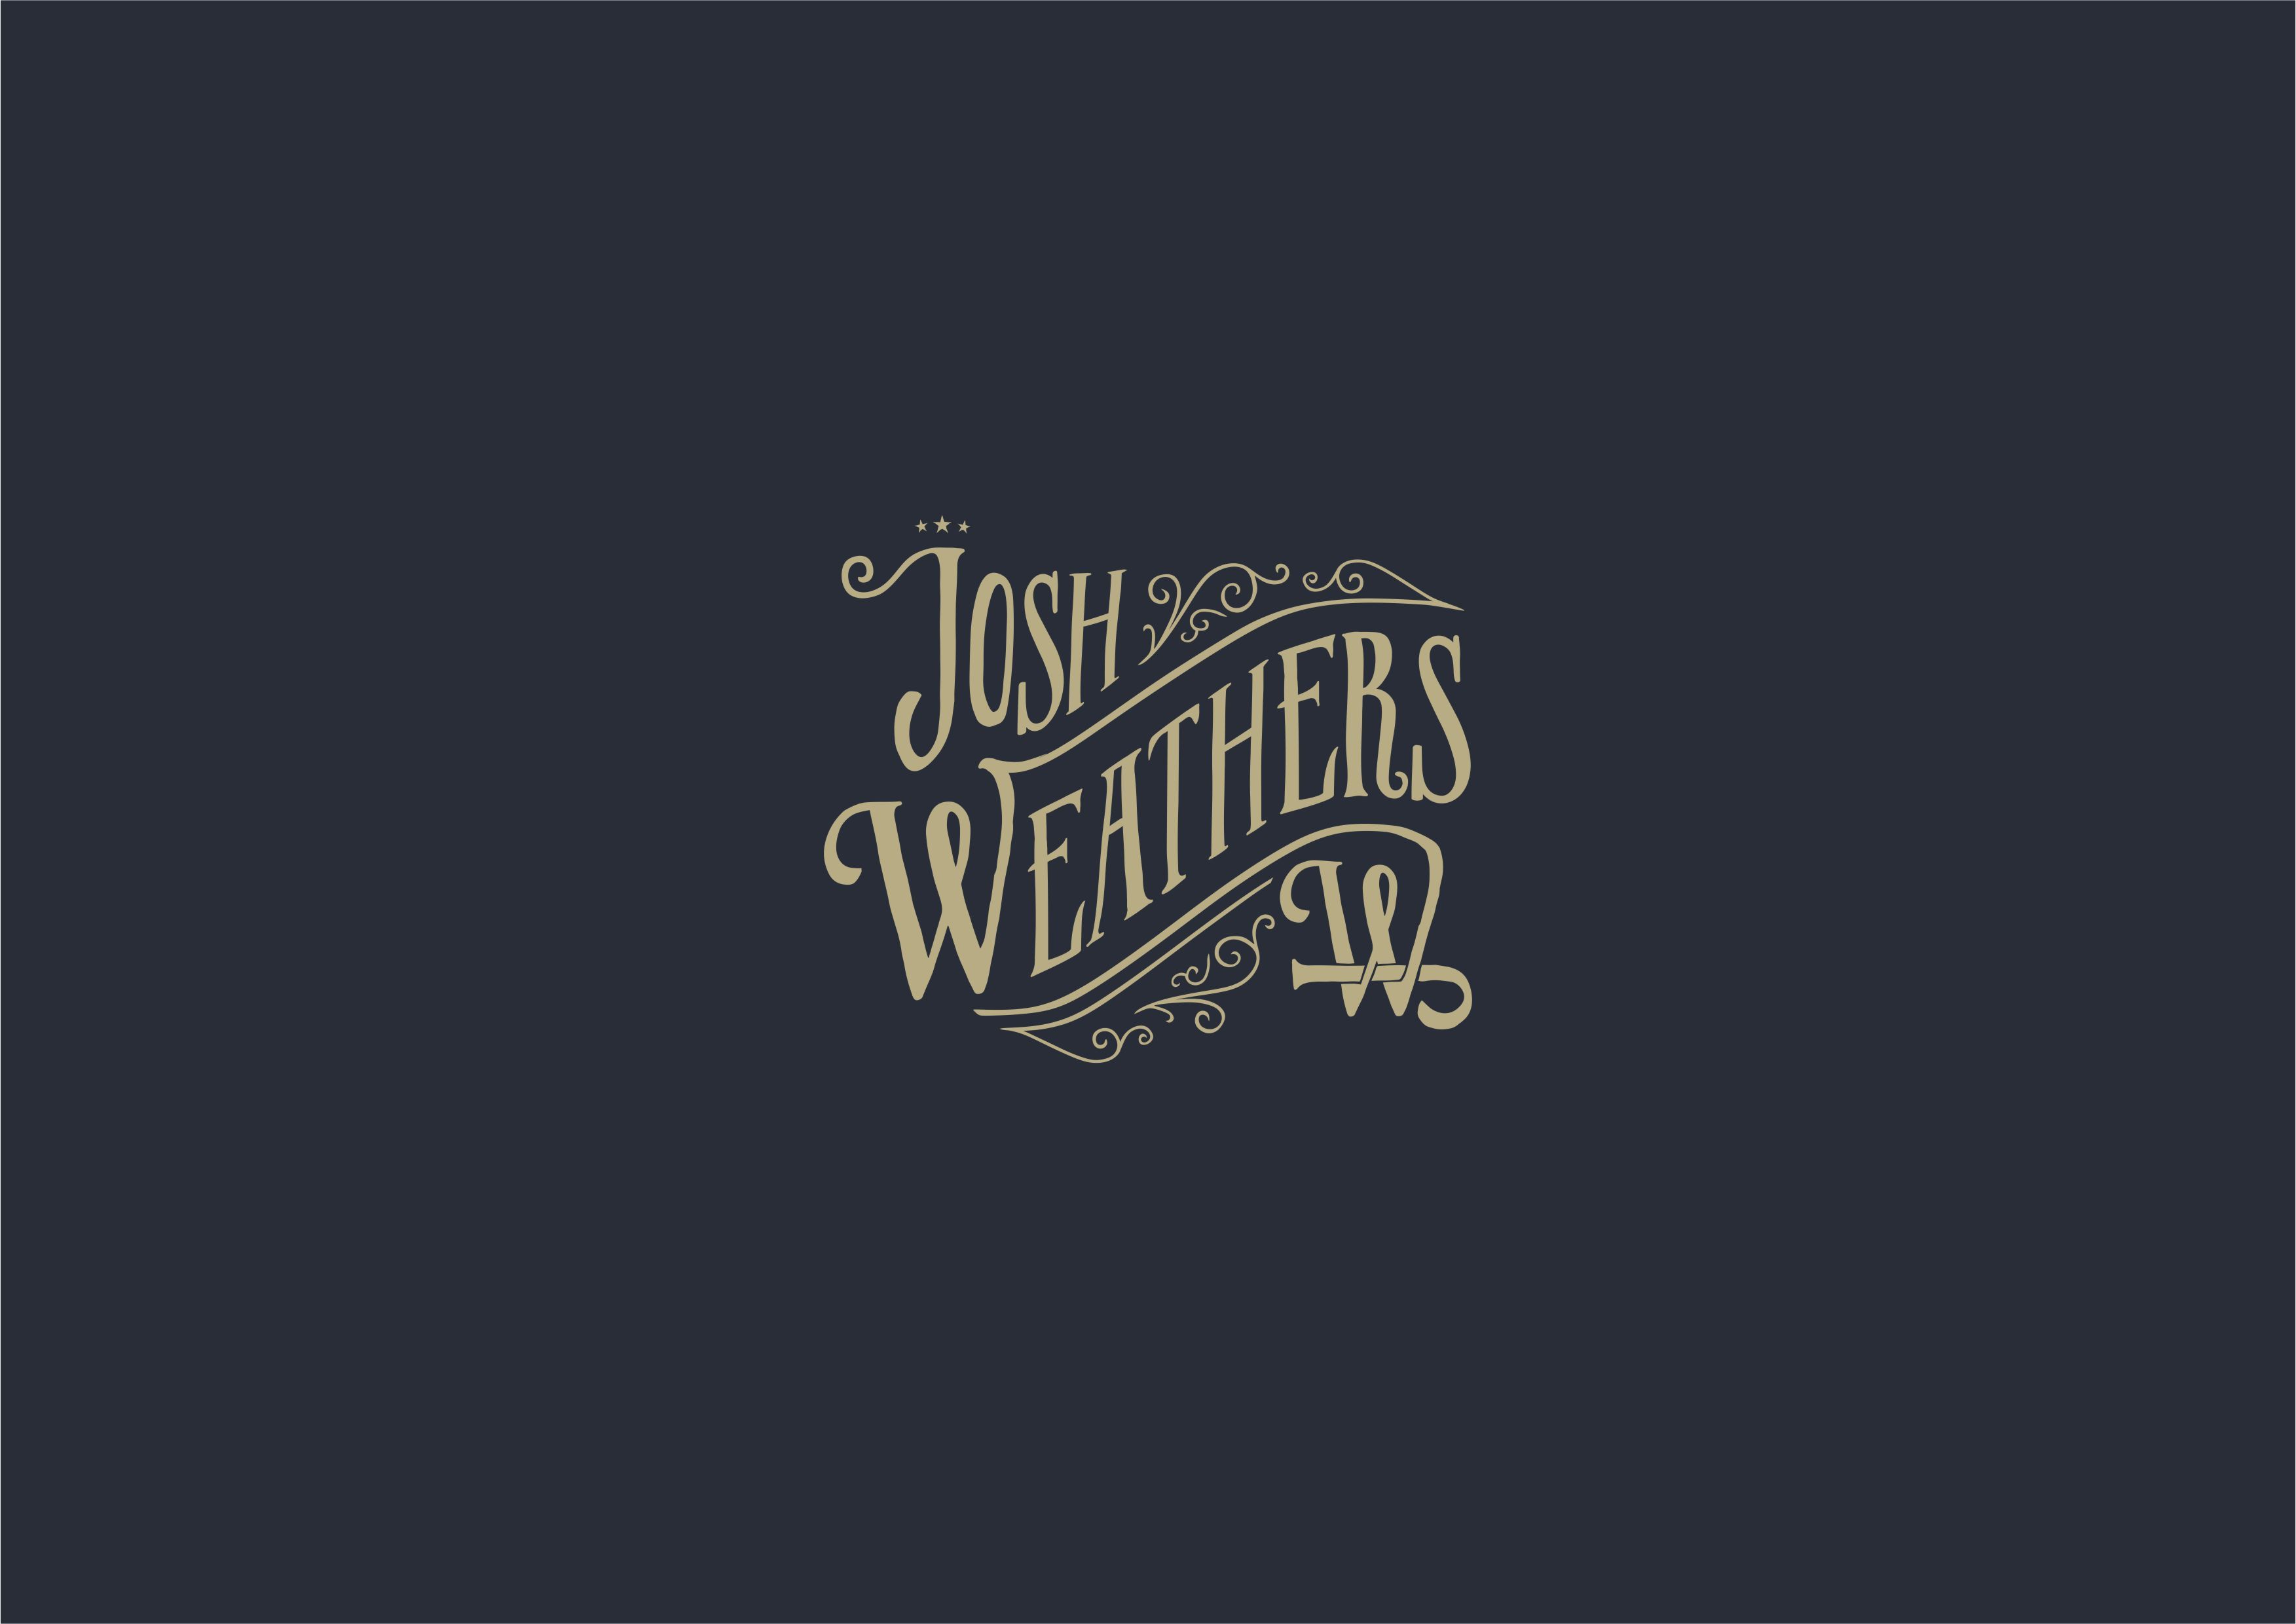 Josh Weathers solo musician logo.